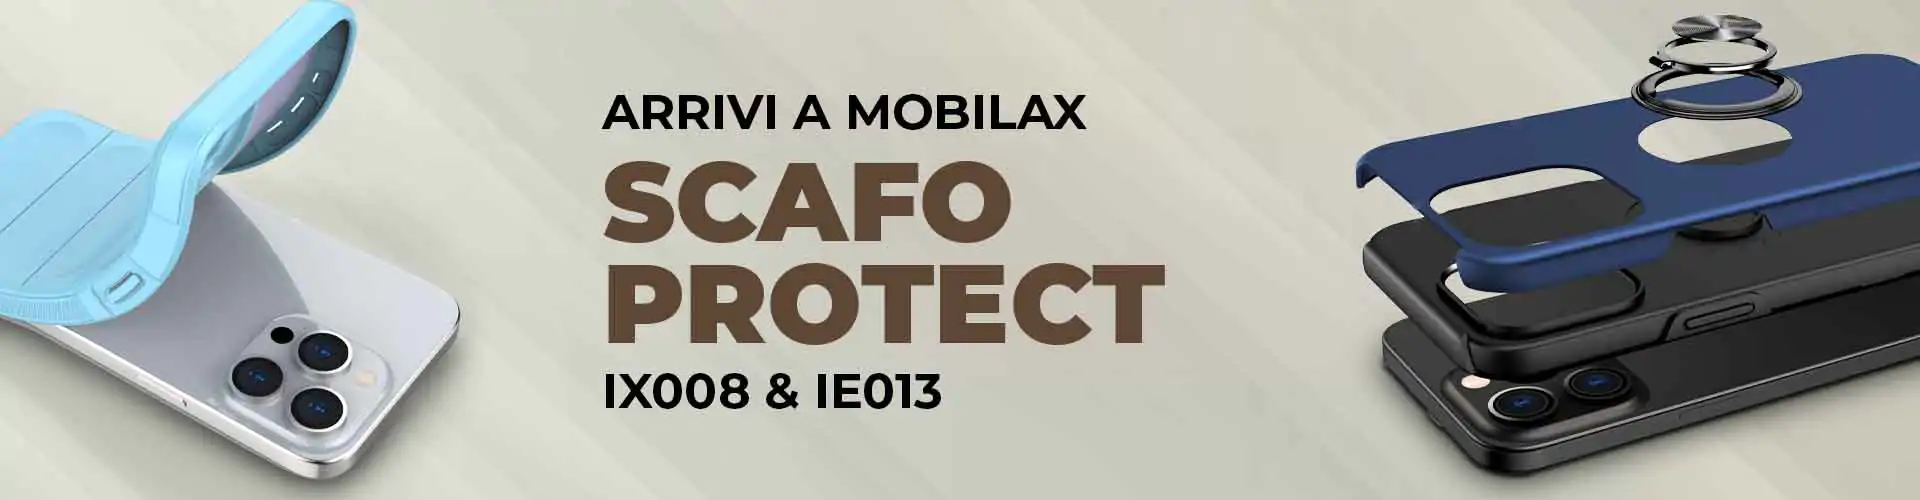 arrivi a mobilax scafo protect IX008 & IE013